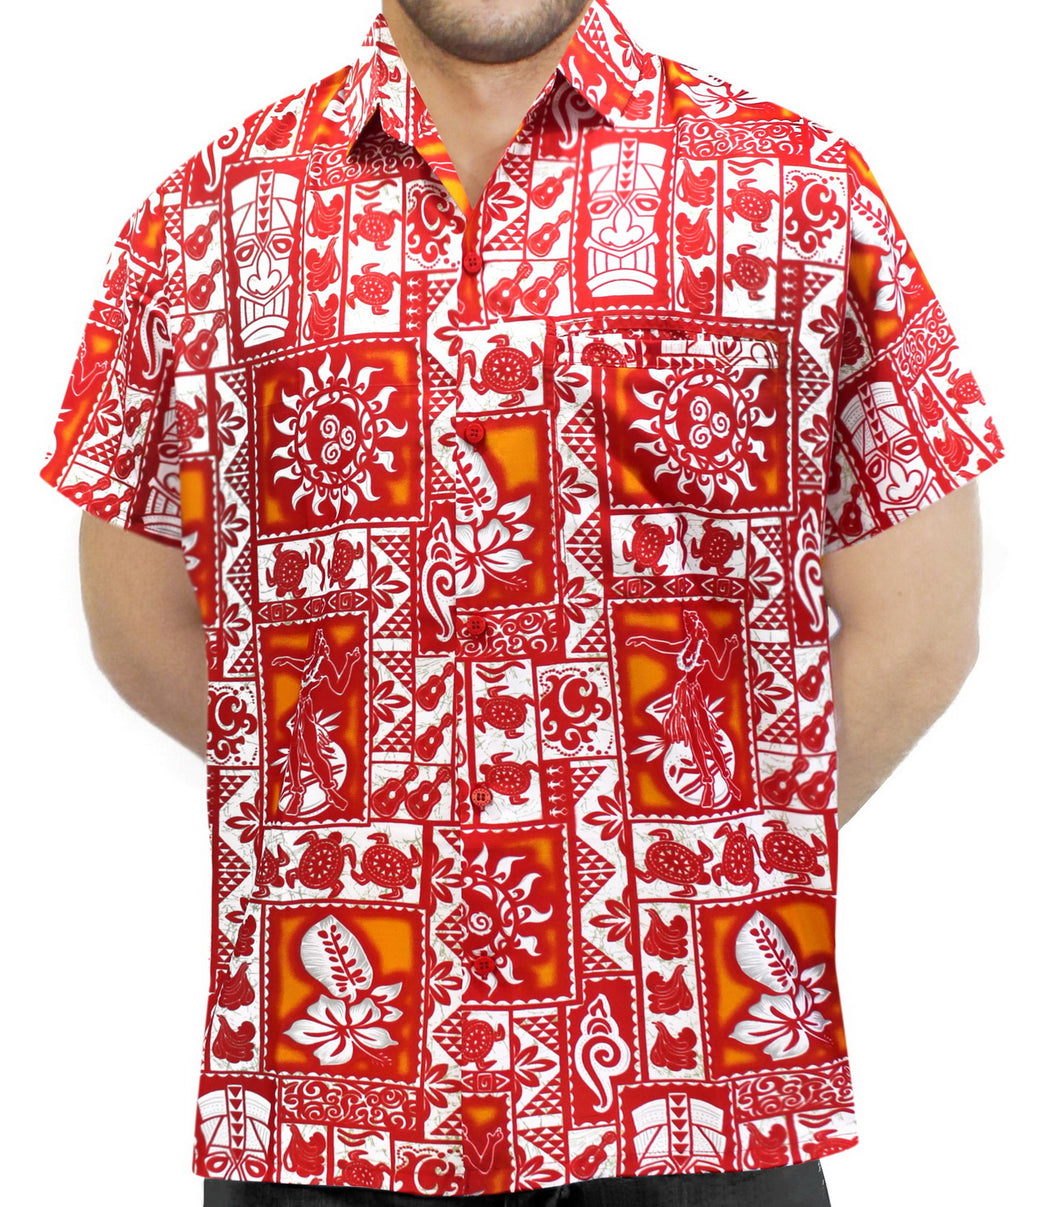 LA LEELA Shirt Casual Button Down Short Sleeve Beach Shirt Men Aloha Pocket Shirt Blood Red_W326